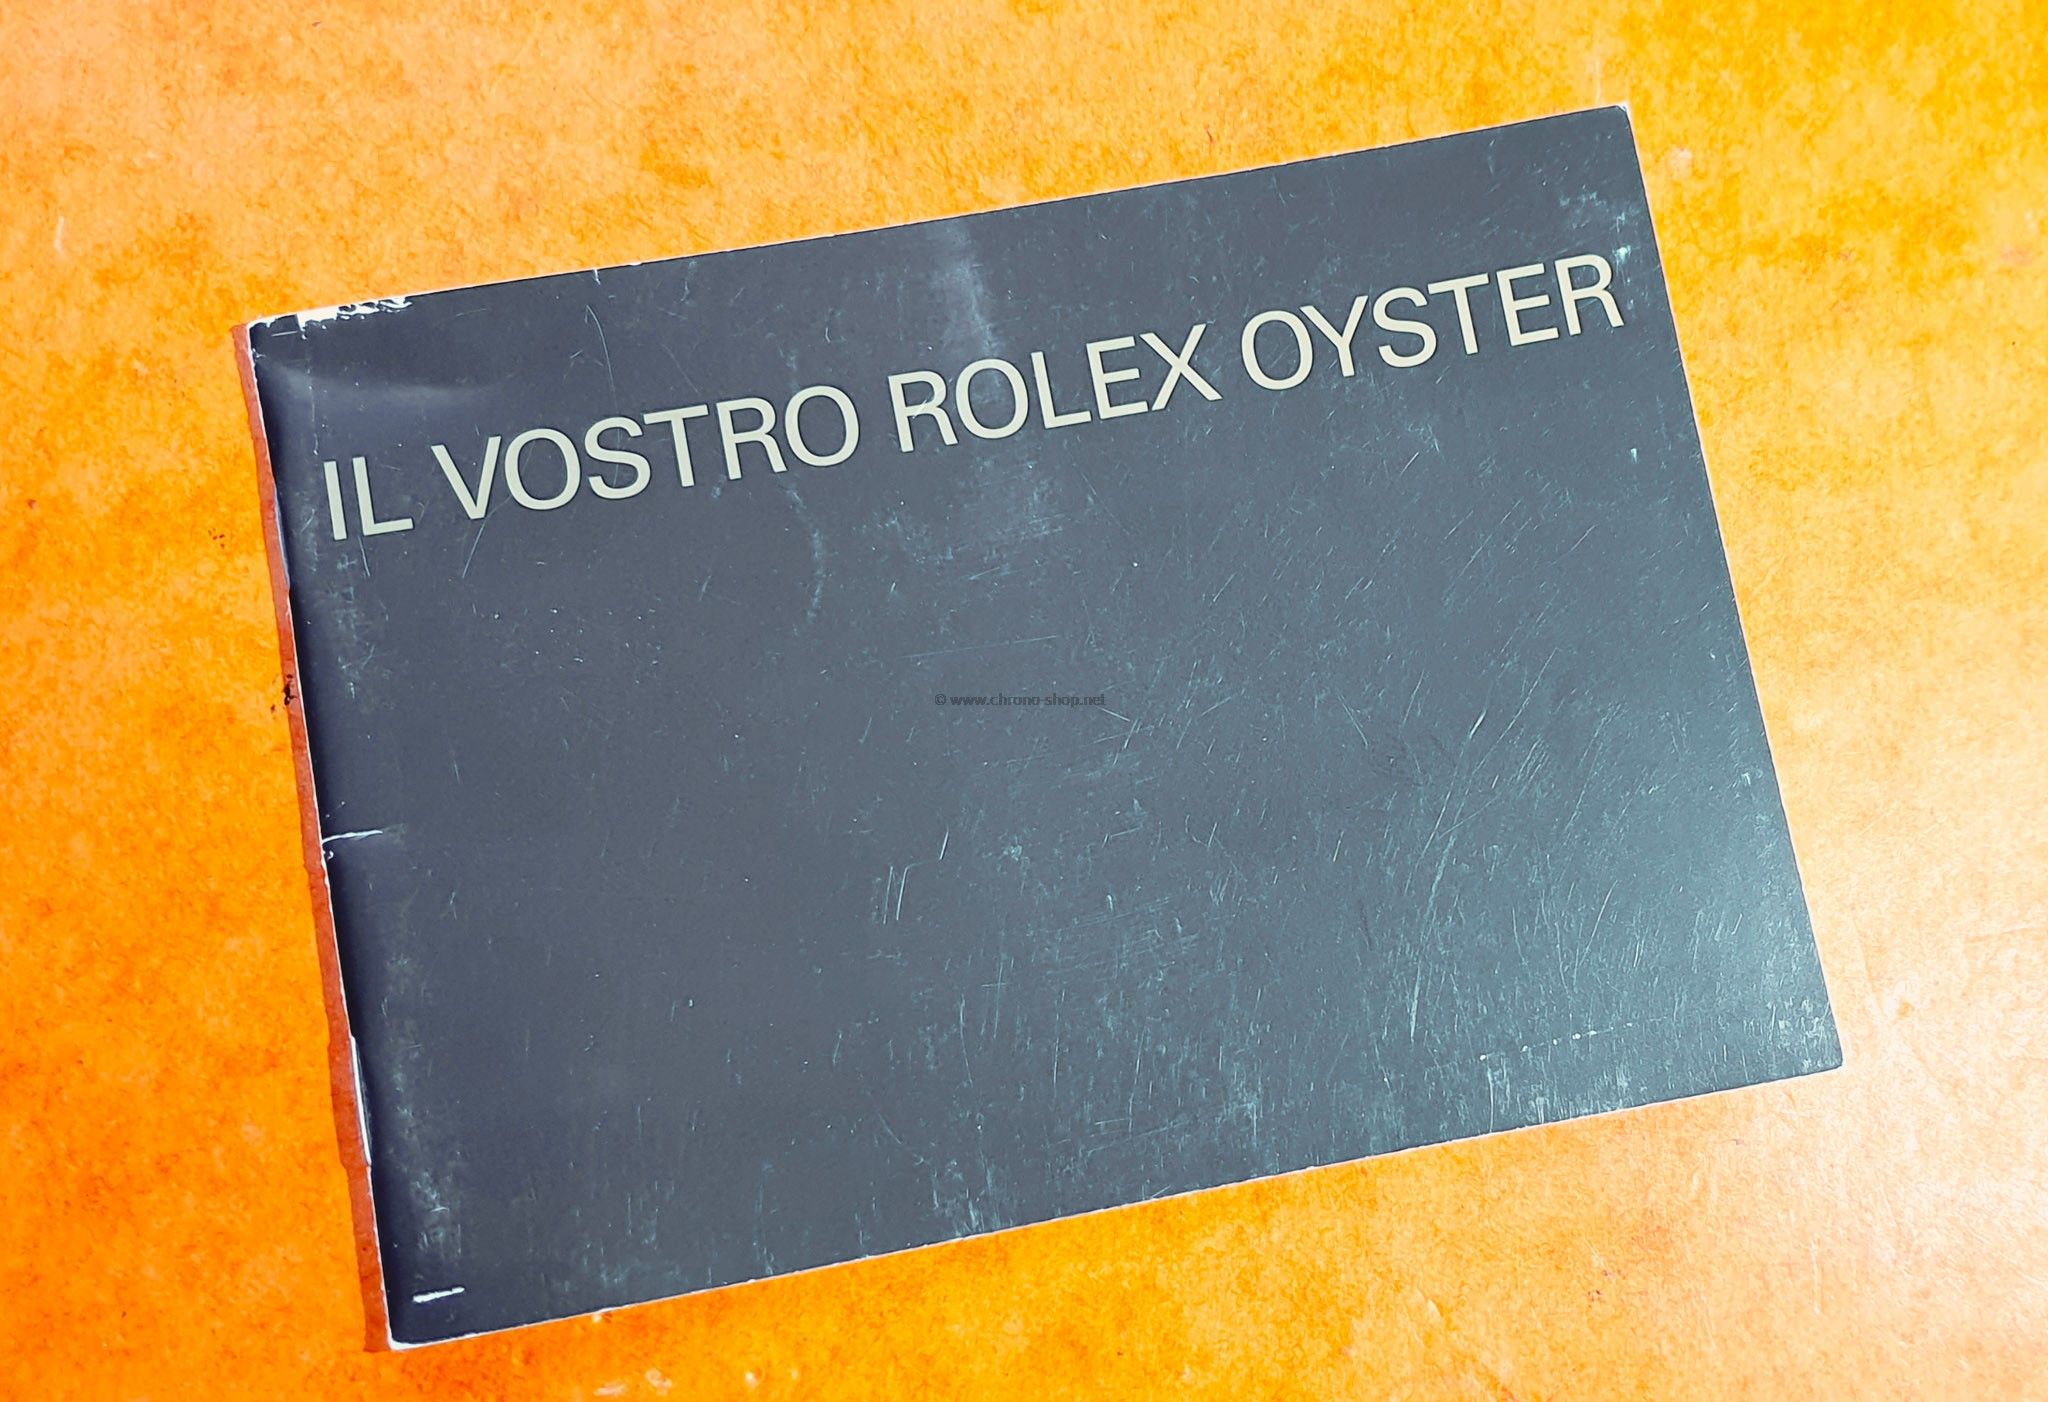 ROLEX 2006 ITALIAN IL VOSTRO ROLEX OYSTER GENUINE OYSTER BOOKLET BROCHURE PAMPHLET SUBMARINER,DATEJUST,EXPLORER,GMT,DAYTONA